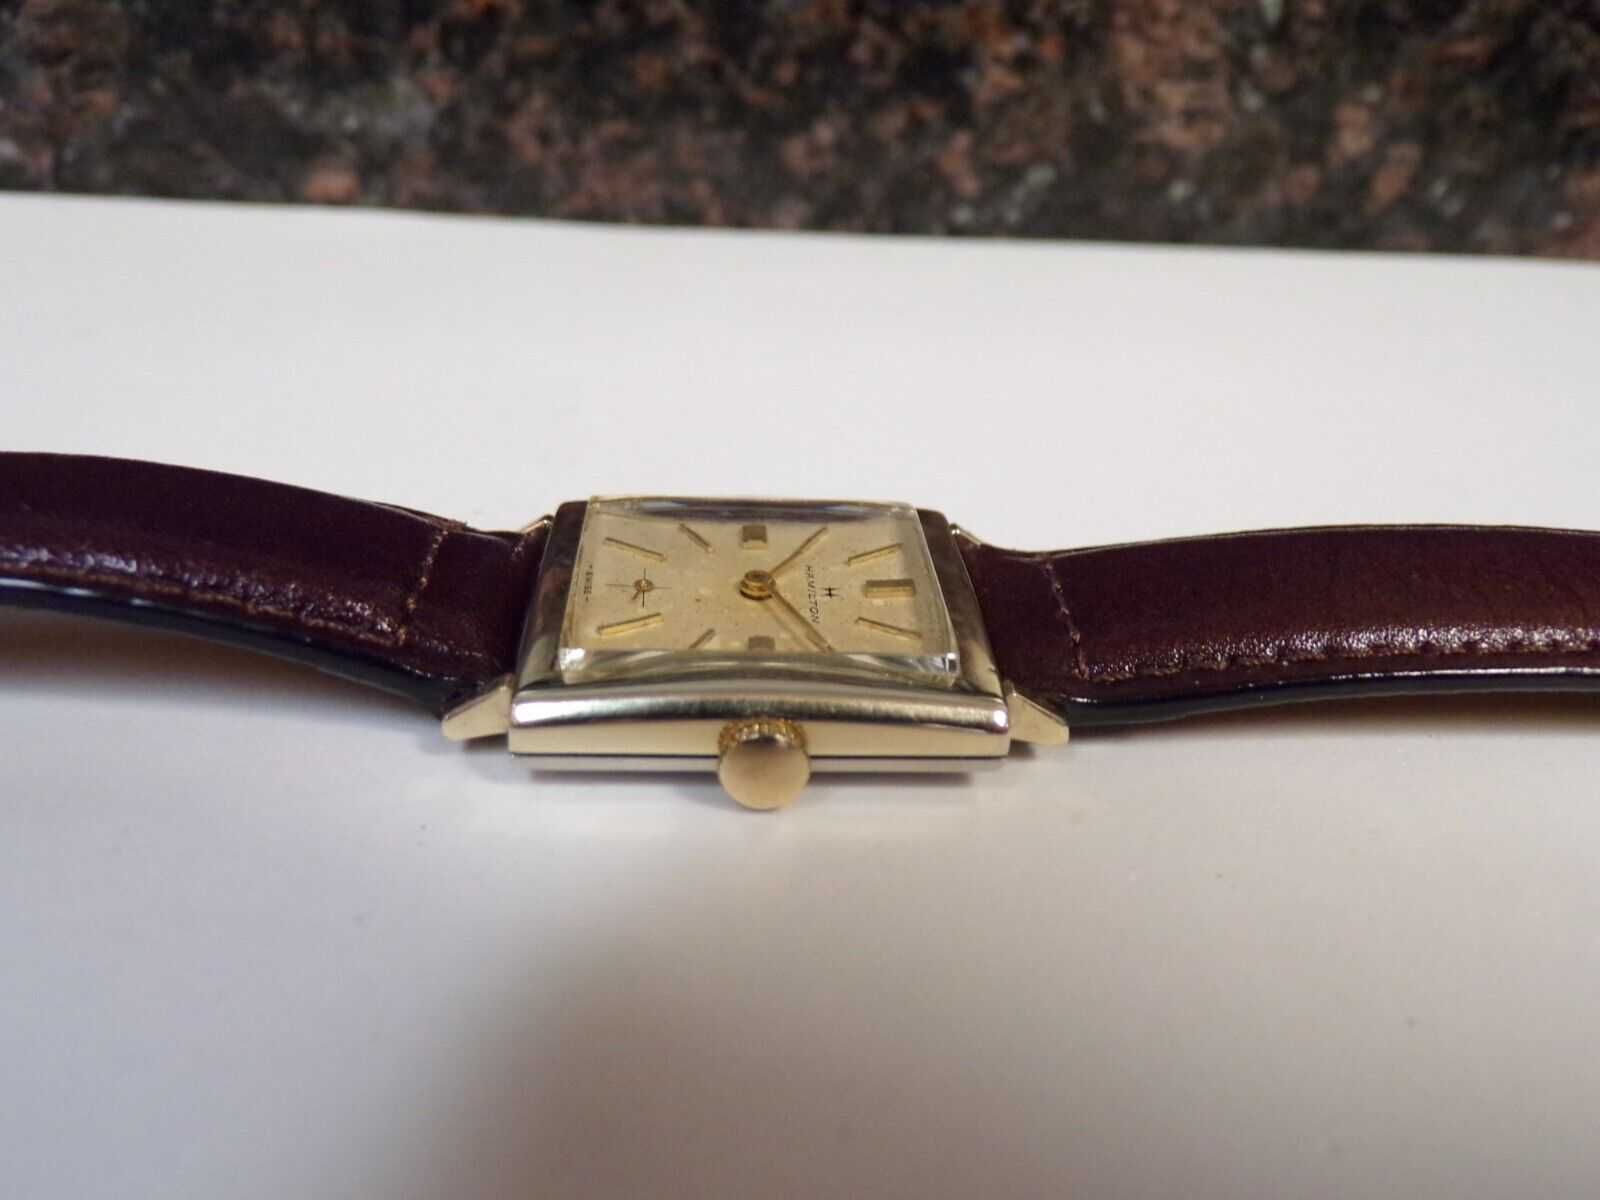 Szwajcarski zegarek Hamilton vintage kostka